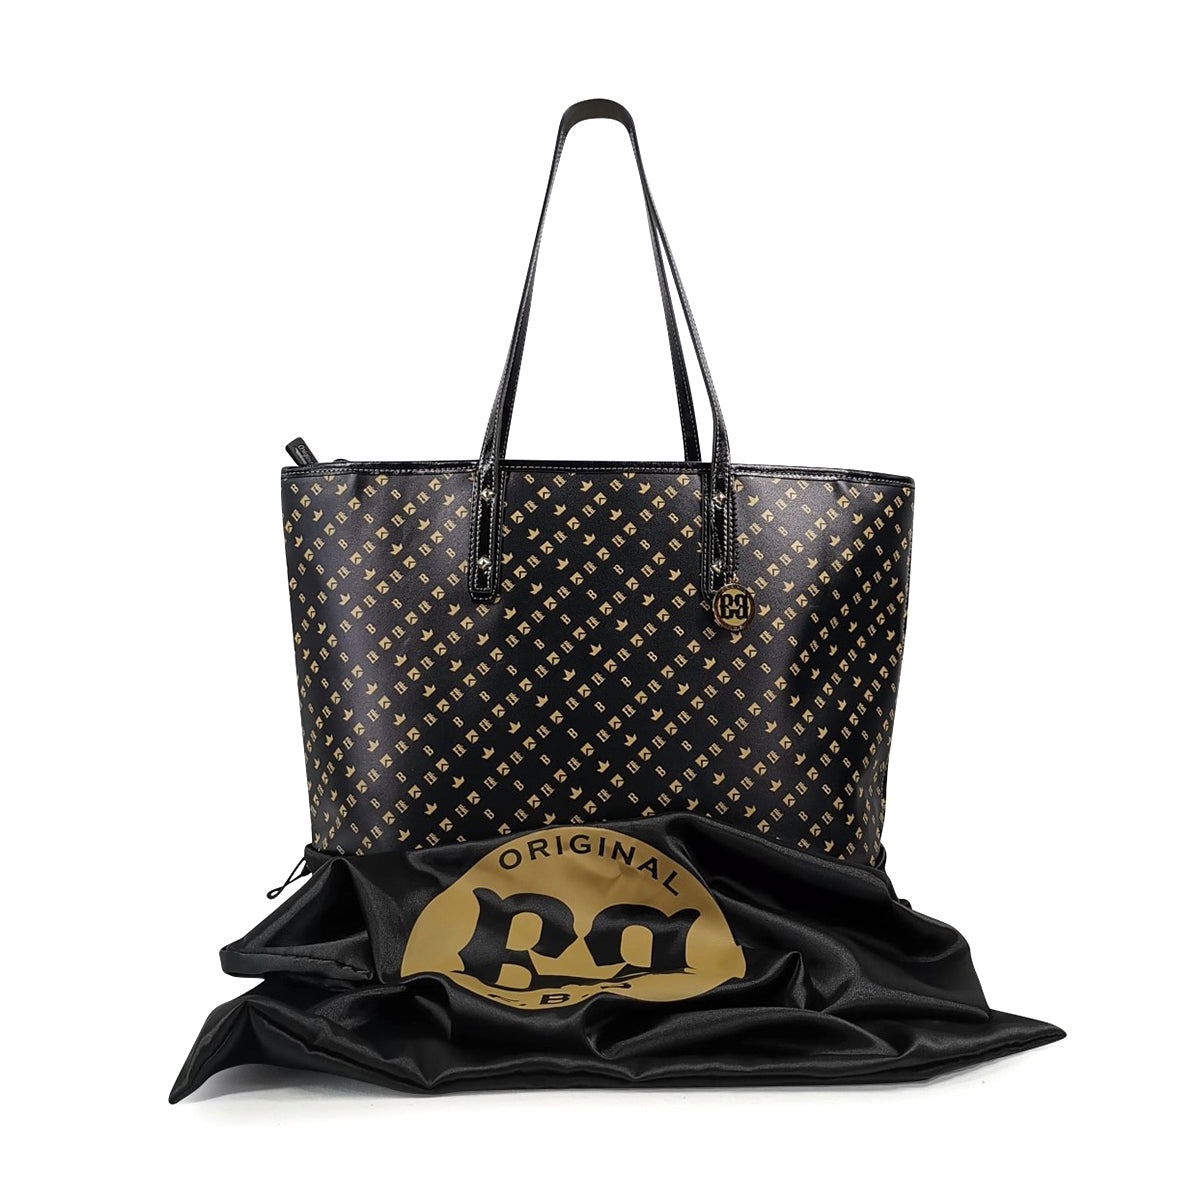 Cocoa Black & Beige M3 Motif Faux Leather Tote Bag